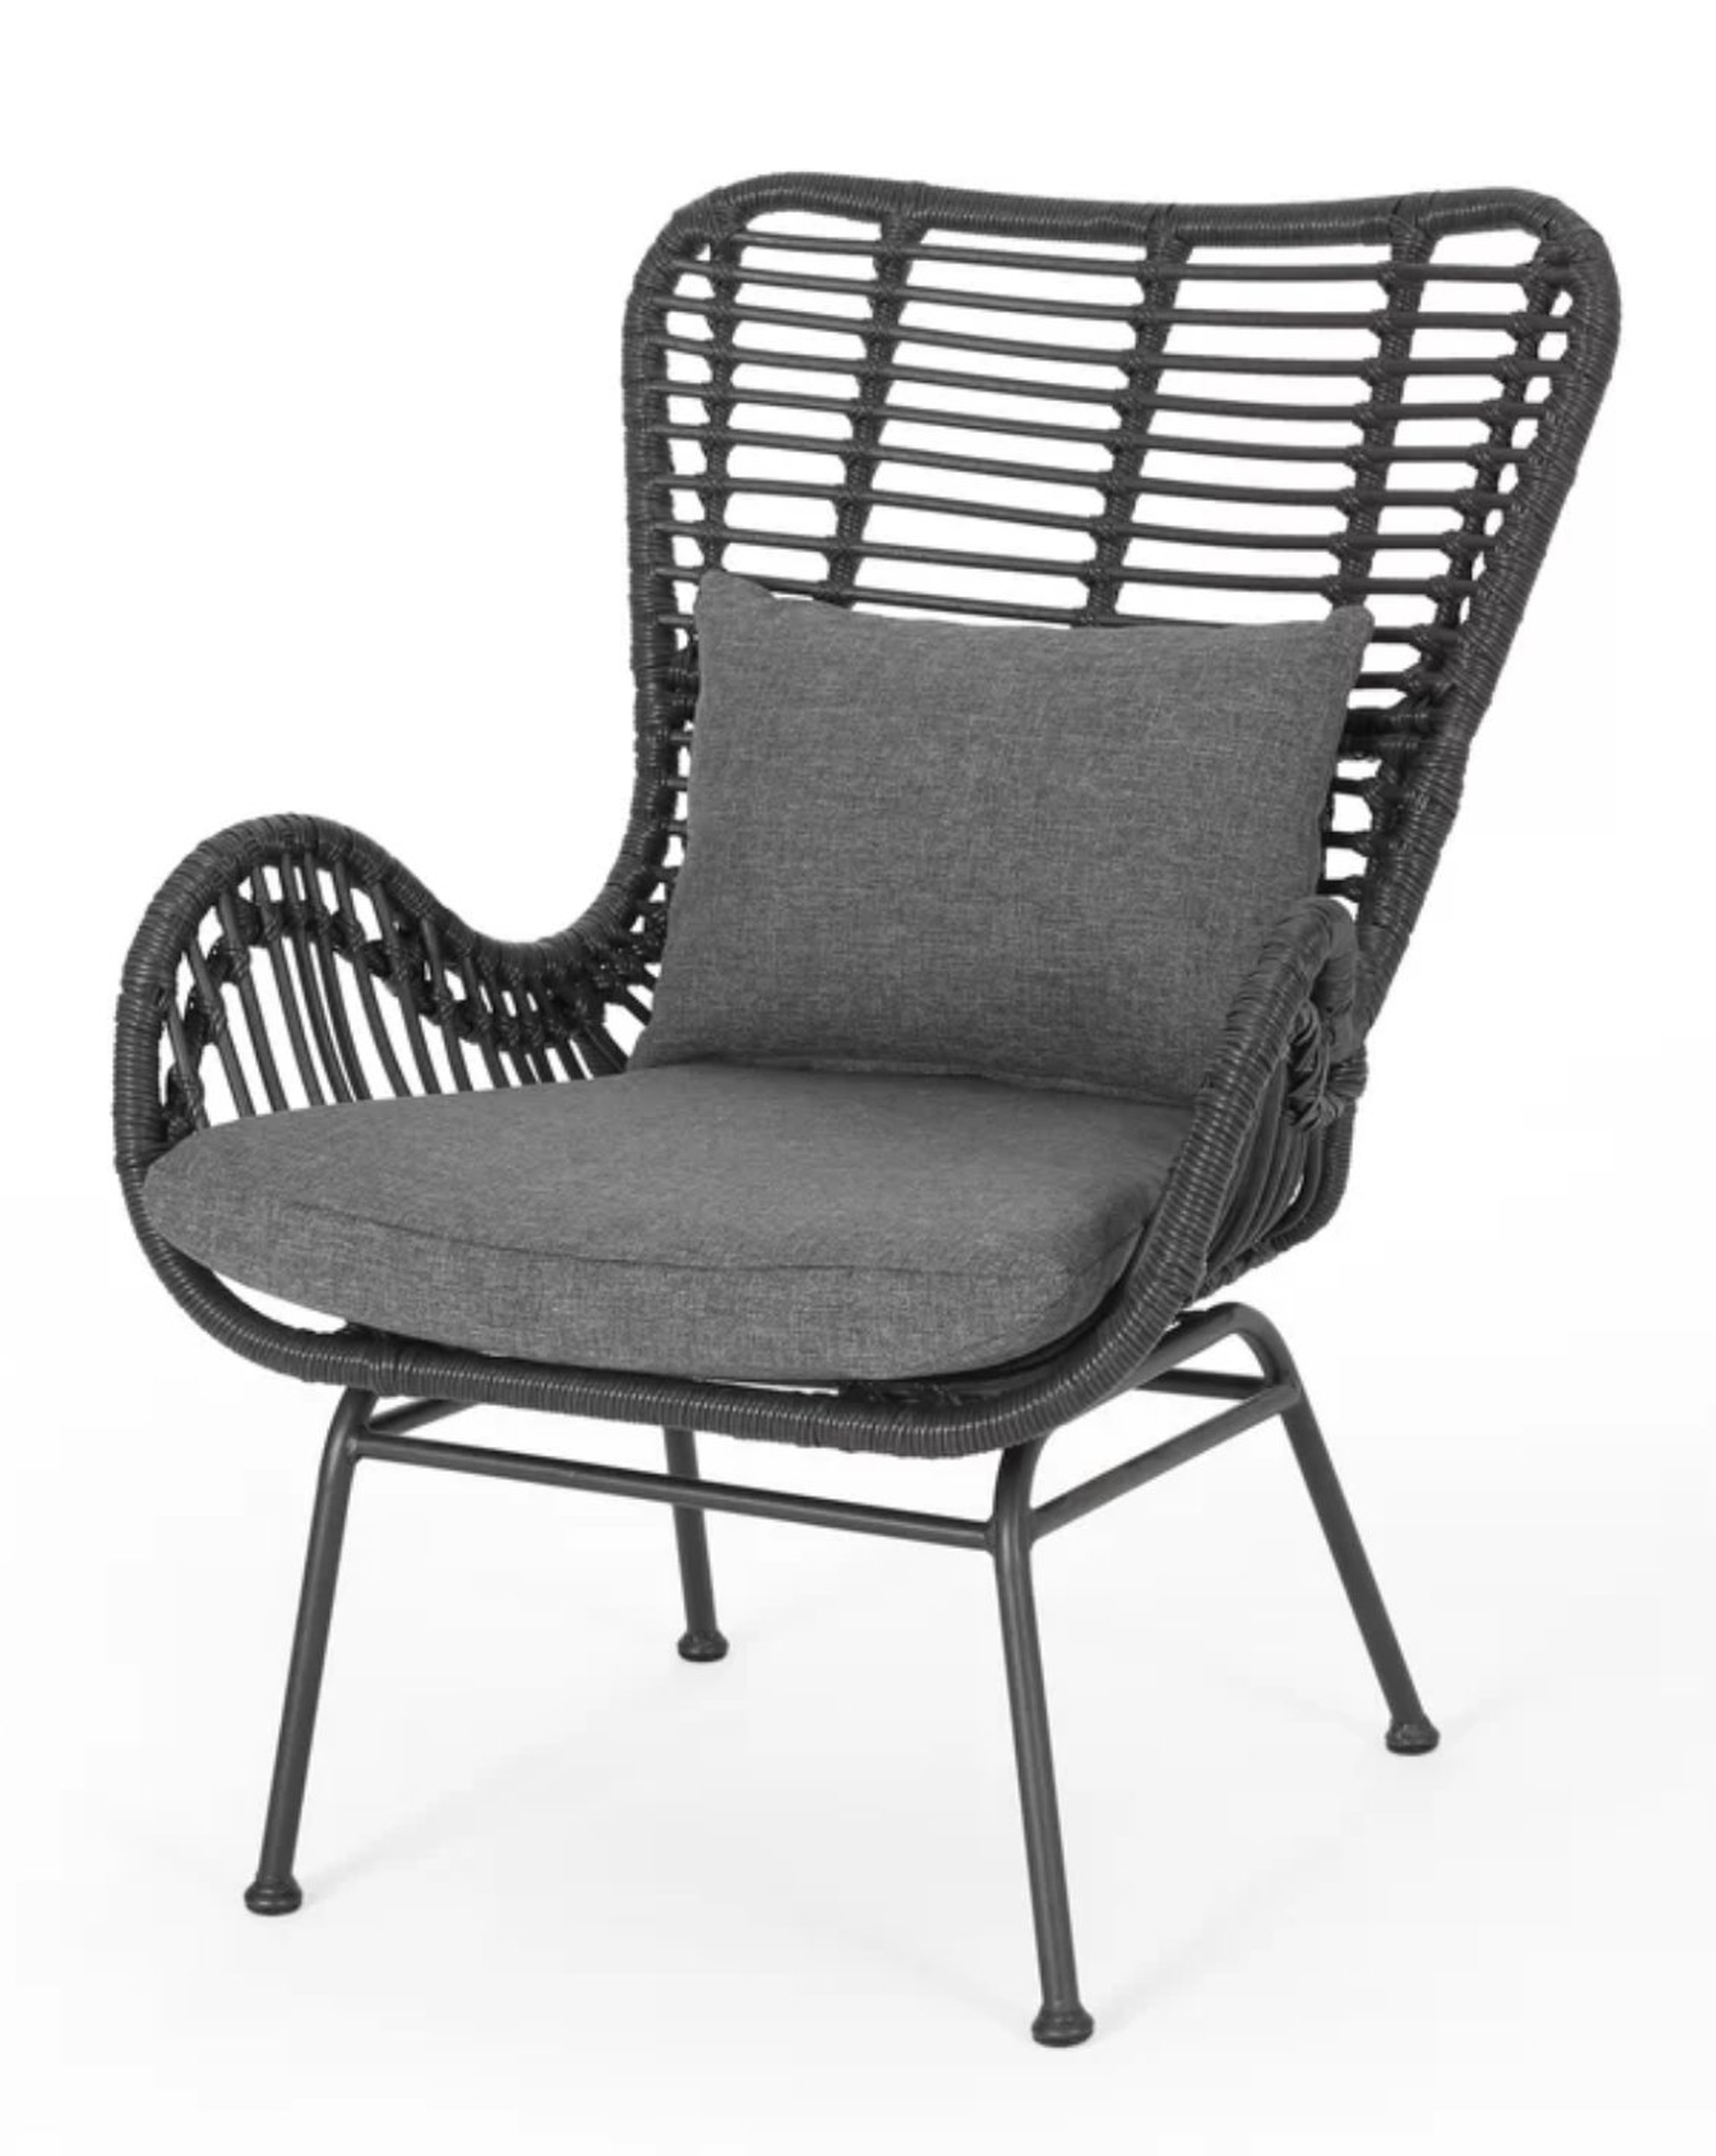 Tarnowski Wicker Patio Chair with Cushions SET OF 2 - Wayfair